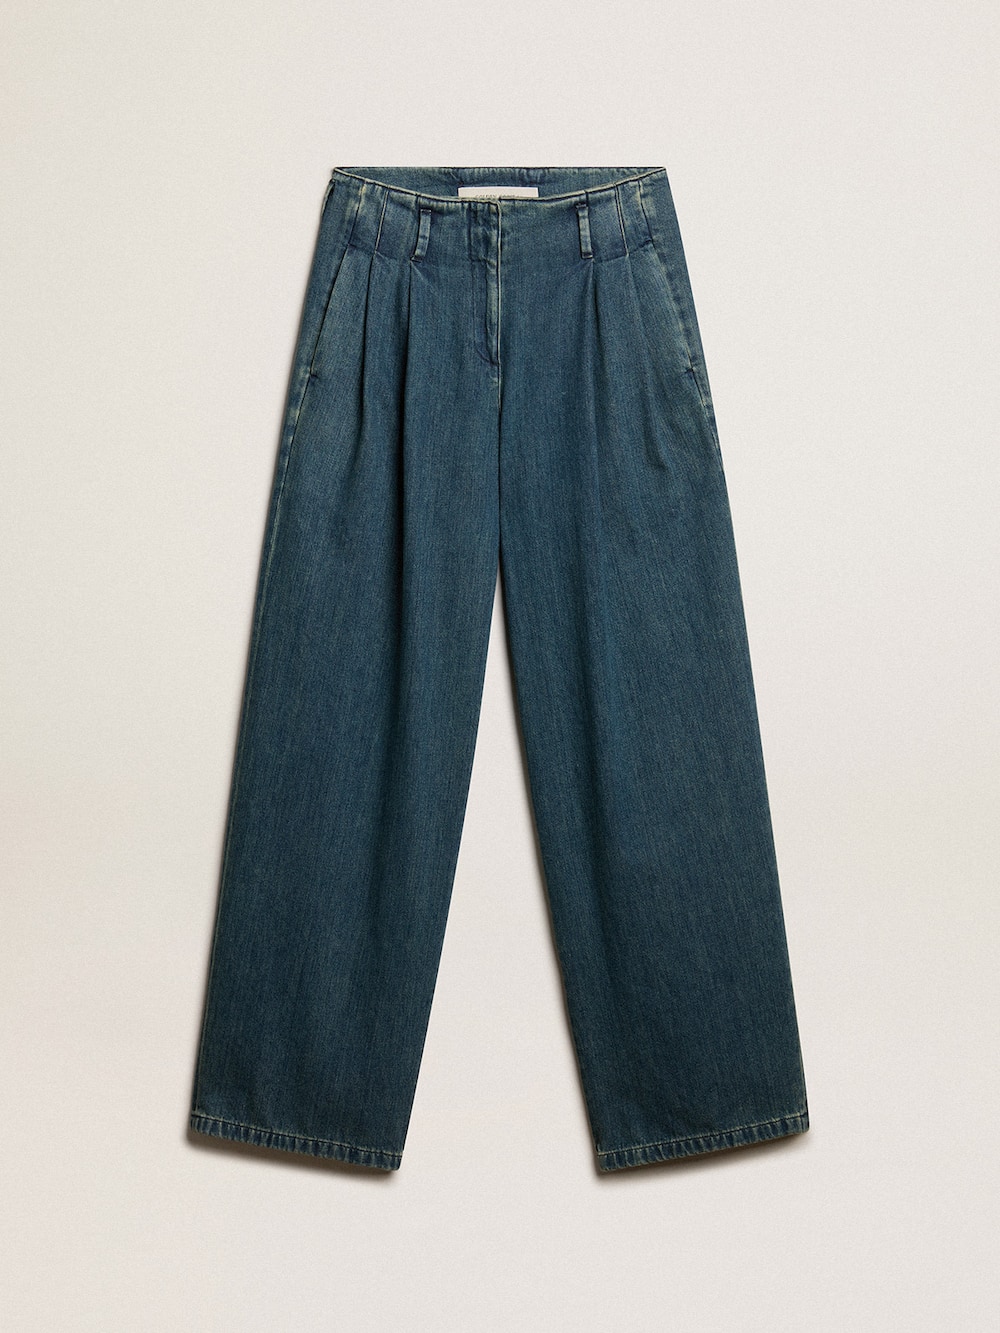 Golden Goose - Women’s blue cotton pleated pants in 